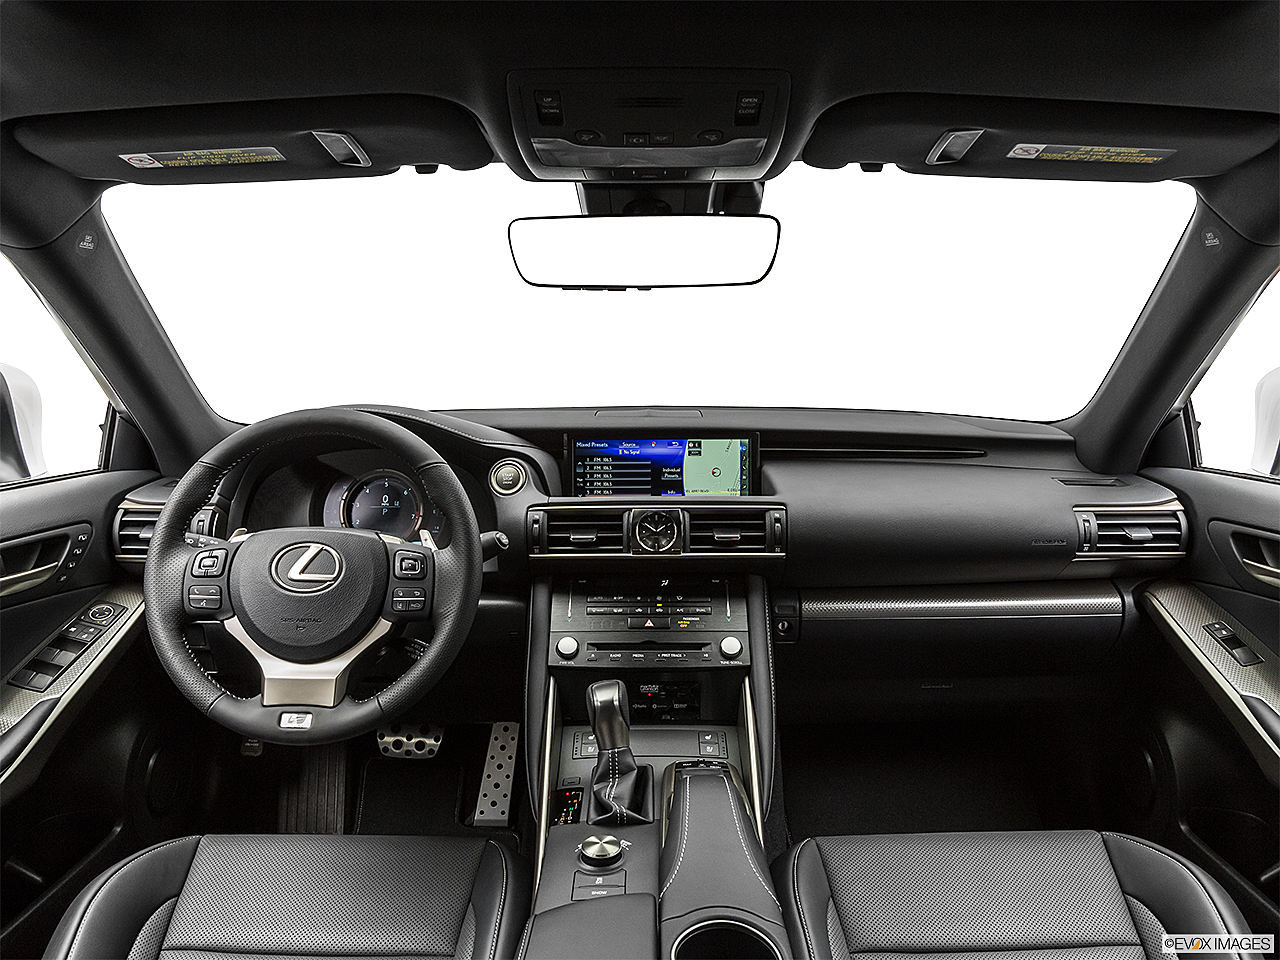 2018 Lexus IS 350 4dr Sedan - Research - GrooveCar